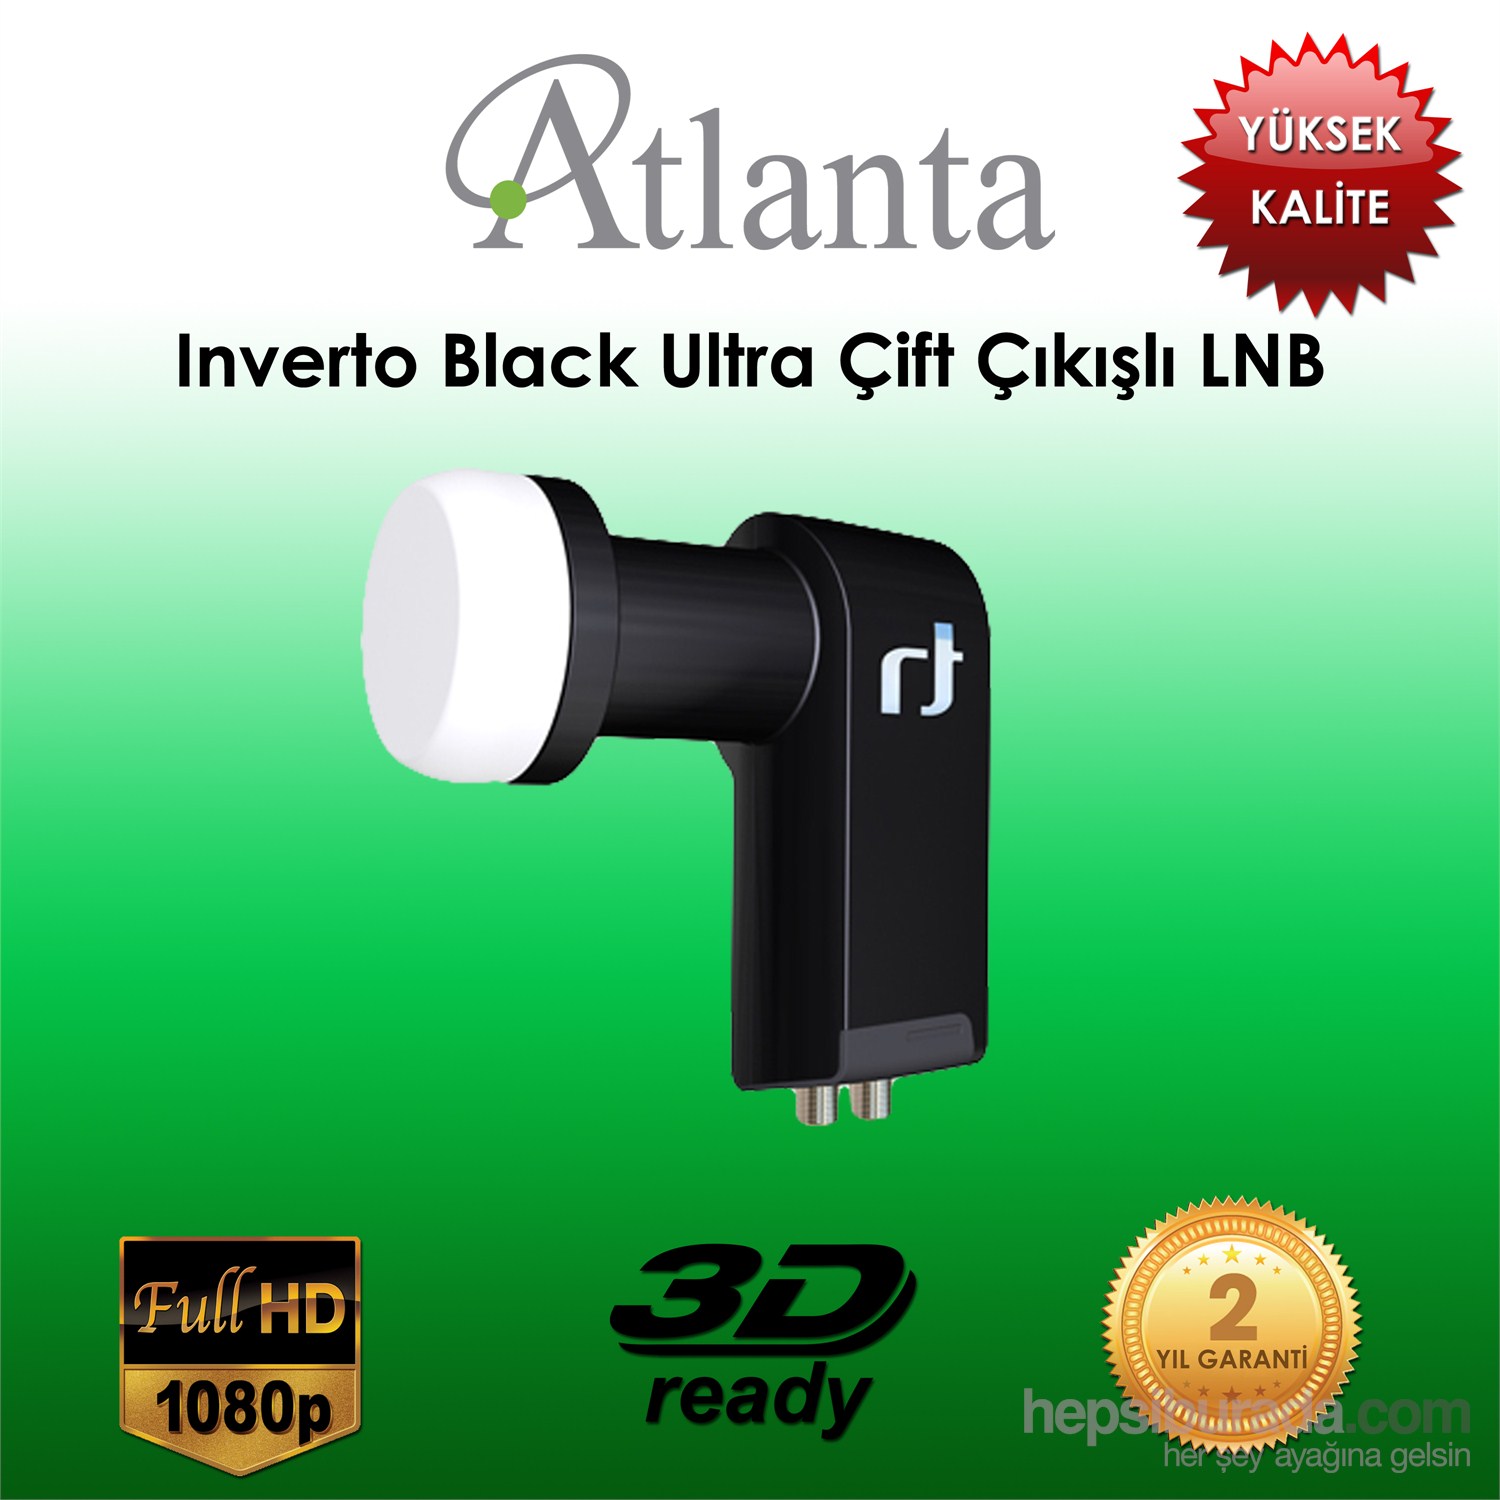 Atlanta Inverto Black Ultra Twin LNB (Çift Çıkışlı)